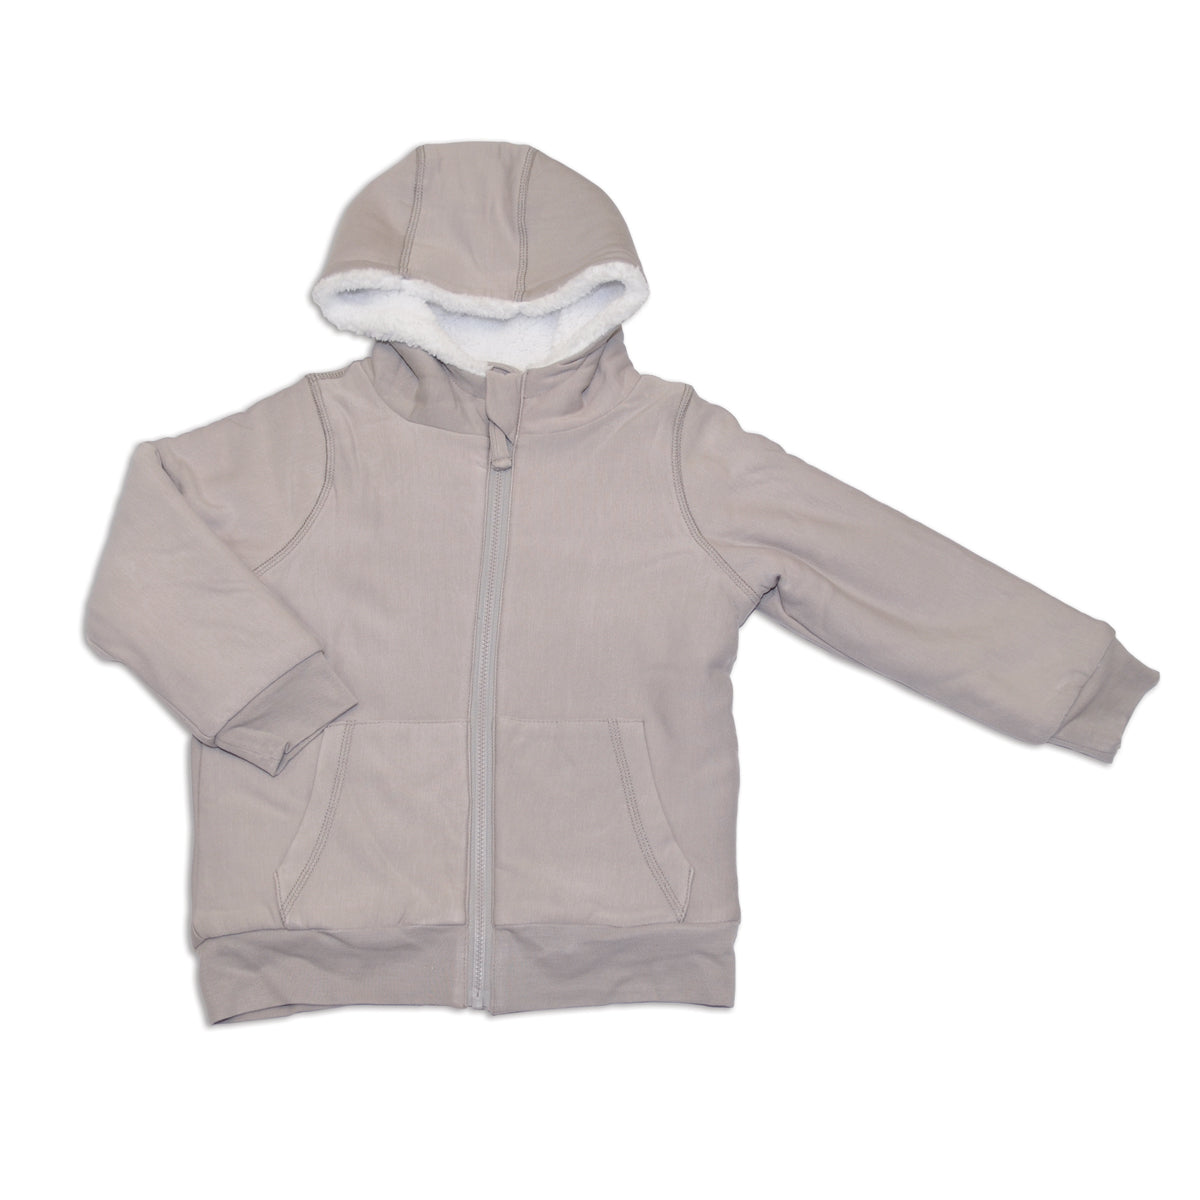 bamboo fleece zip hoodie with sherpa lining (drizzle)